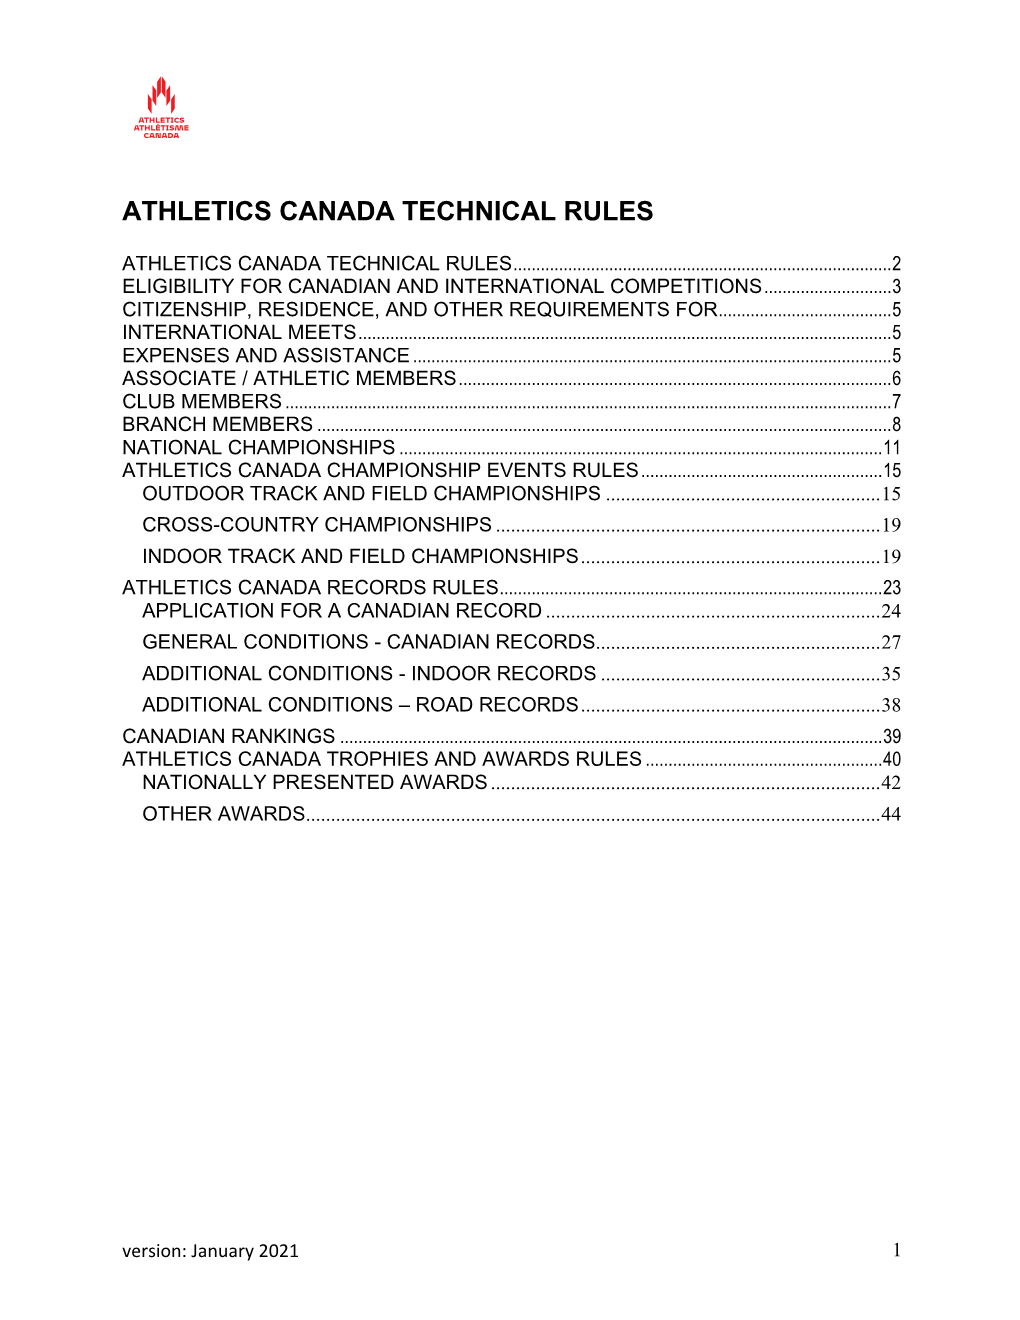 Athletics Canada Technical Rules